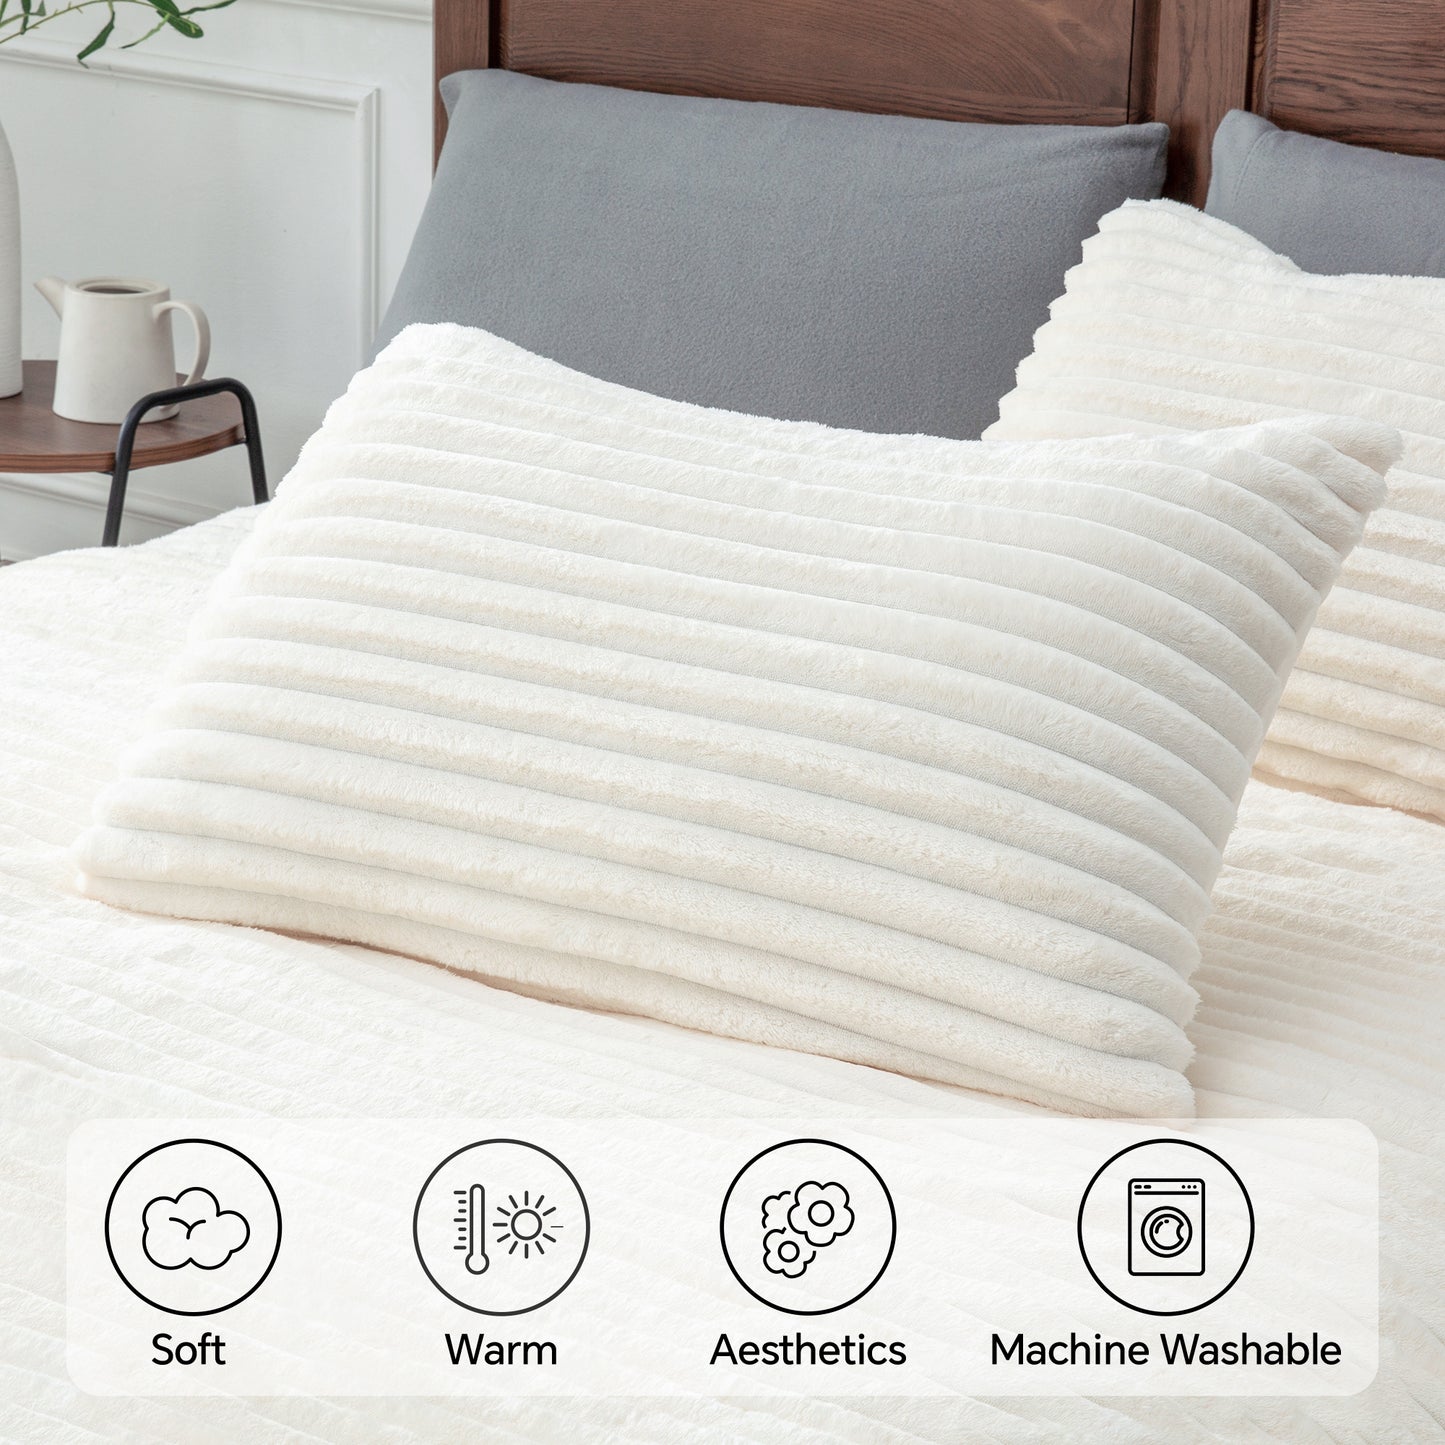 Fleece Comforter Set -Super Soft & Warm Fluffy Bedding, Luxury Fuzzy Heavy Bed Set for Winter